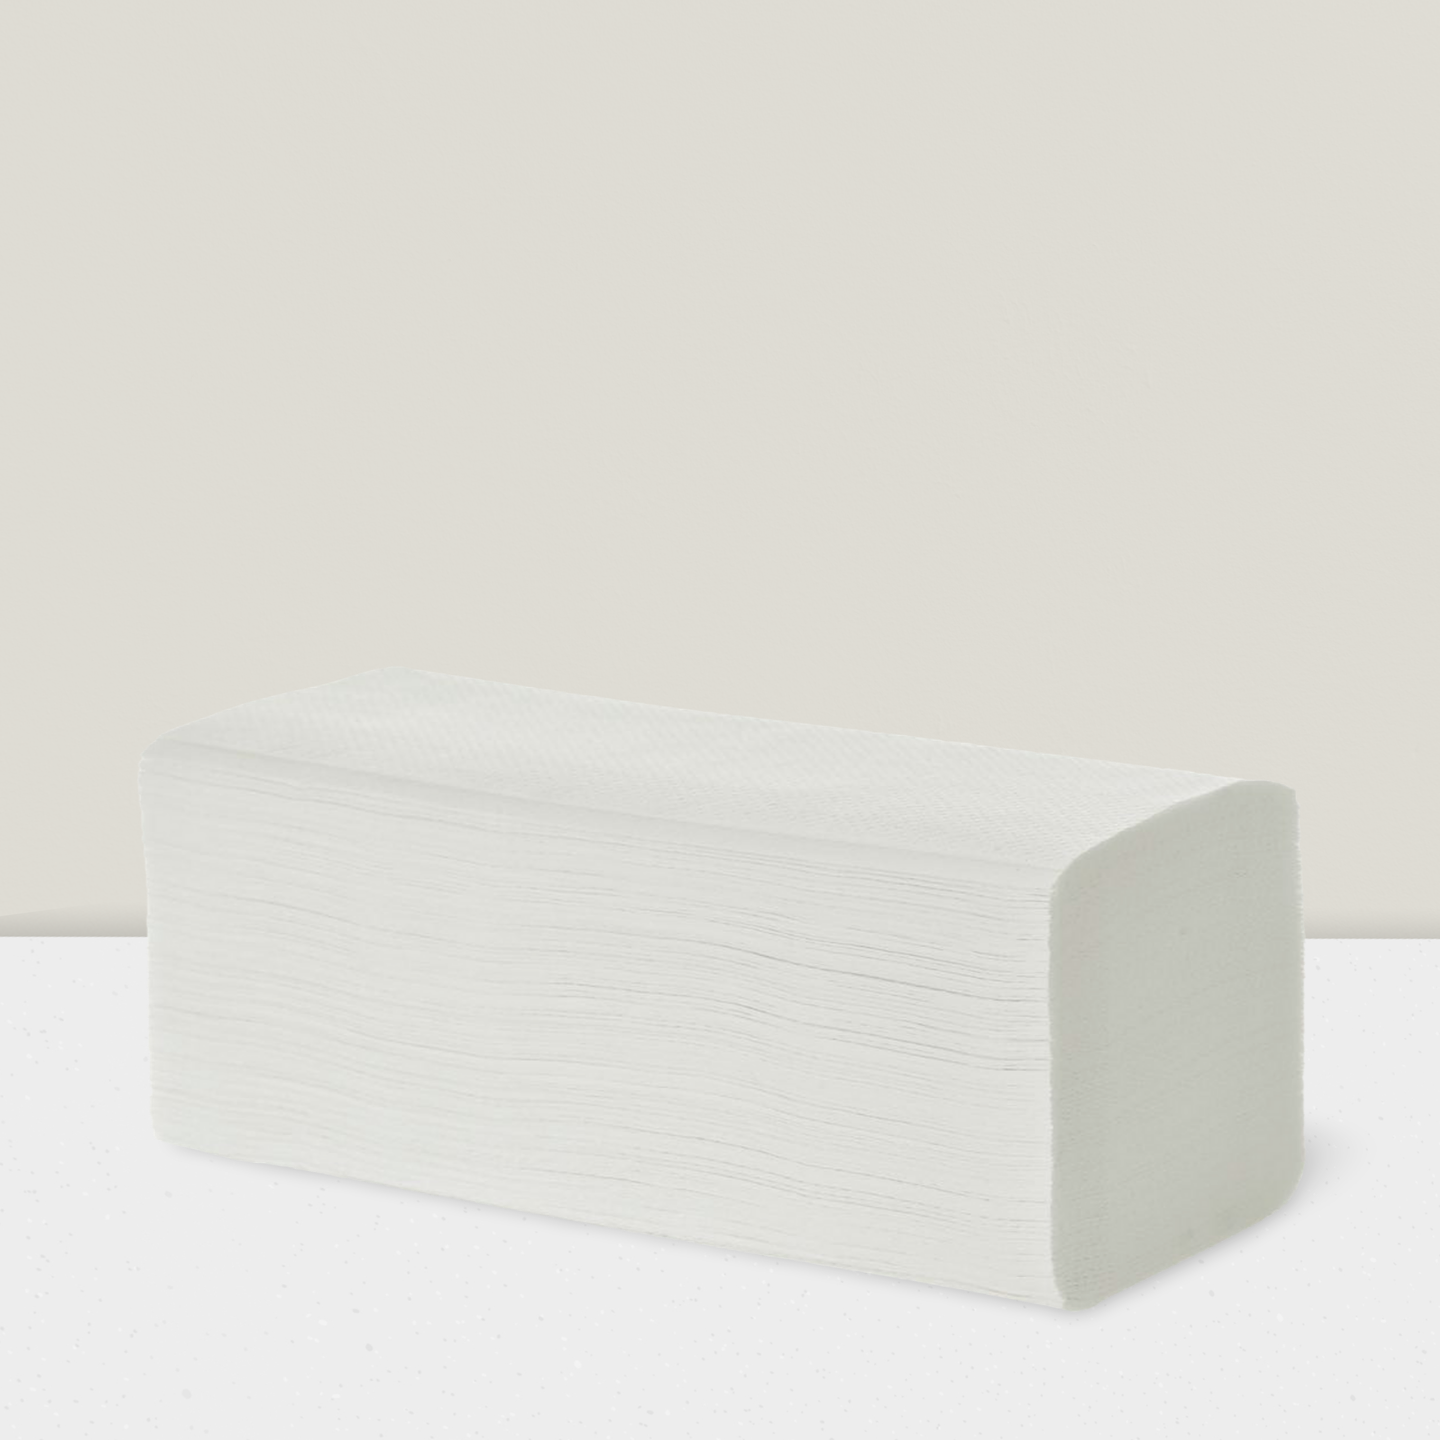 Papier- und Falthandtuch, V-Falz, 23 x 21cm, 2-lagig, weiß